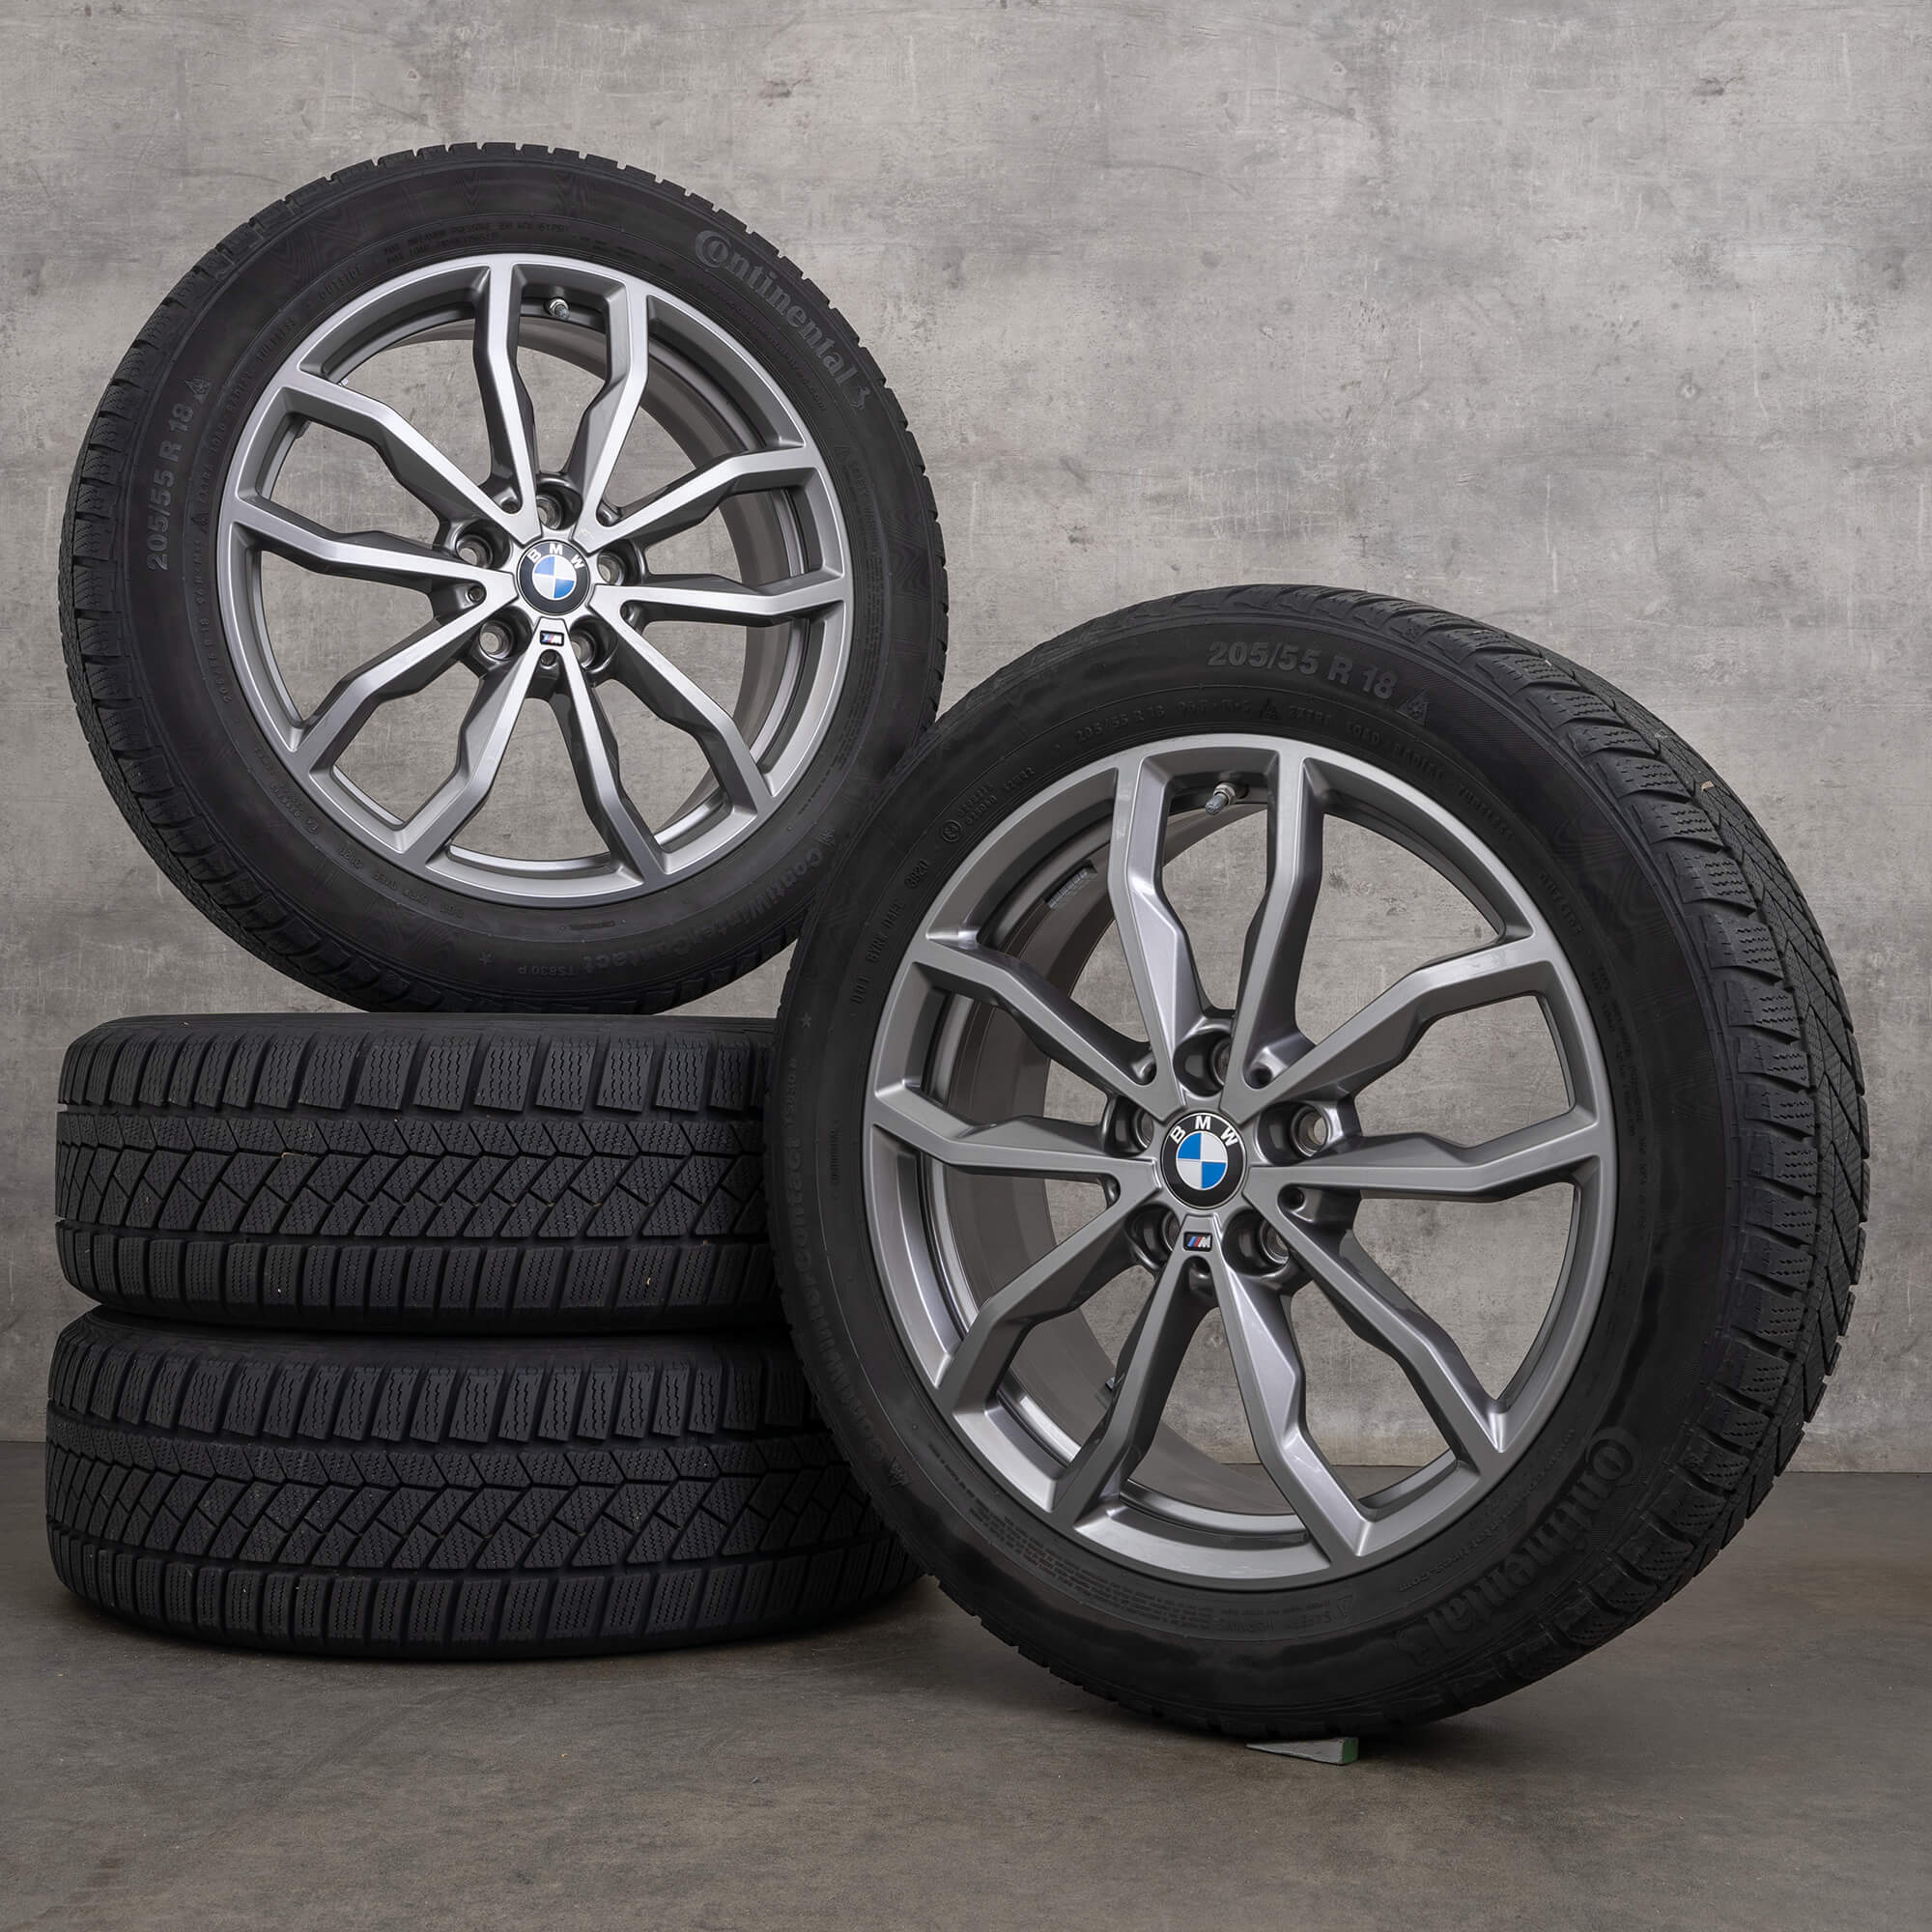 BMW X1 F48 X2 F39 winter wheels 18 inch rims tires 6877550 Styling 771